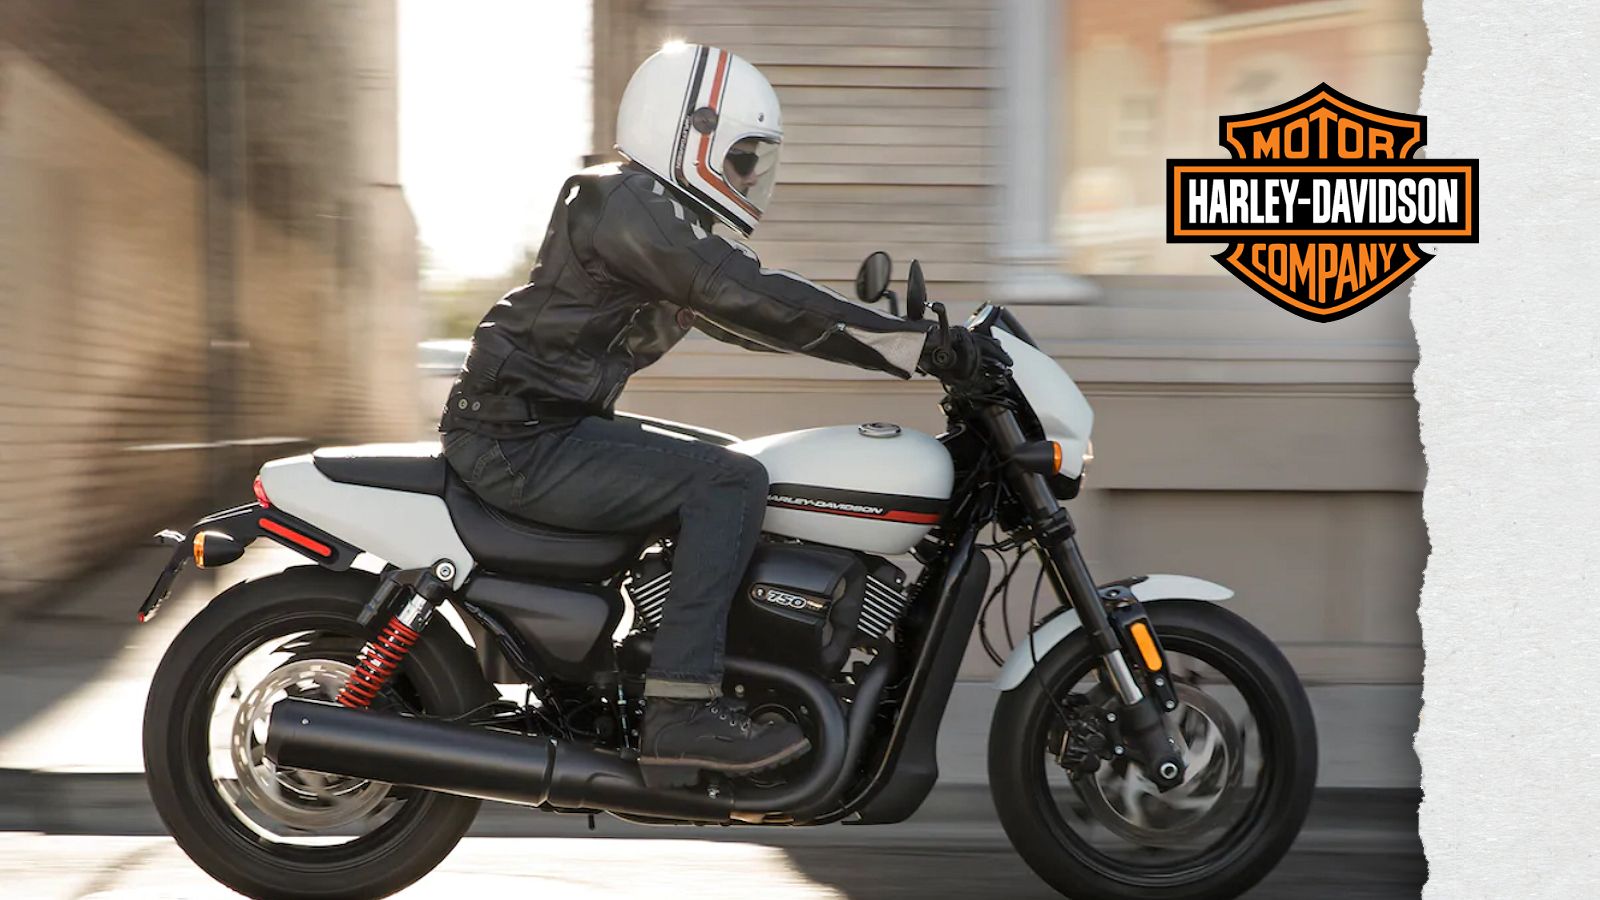 2017 - 2020 Harley-Davidson Street Rod